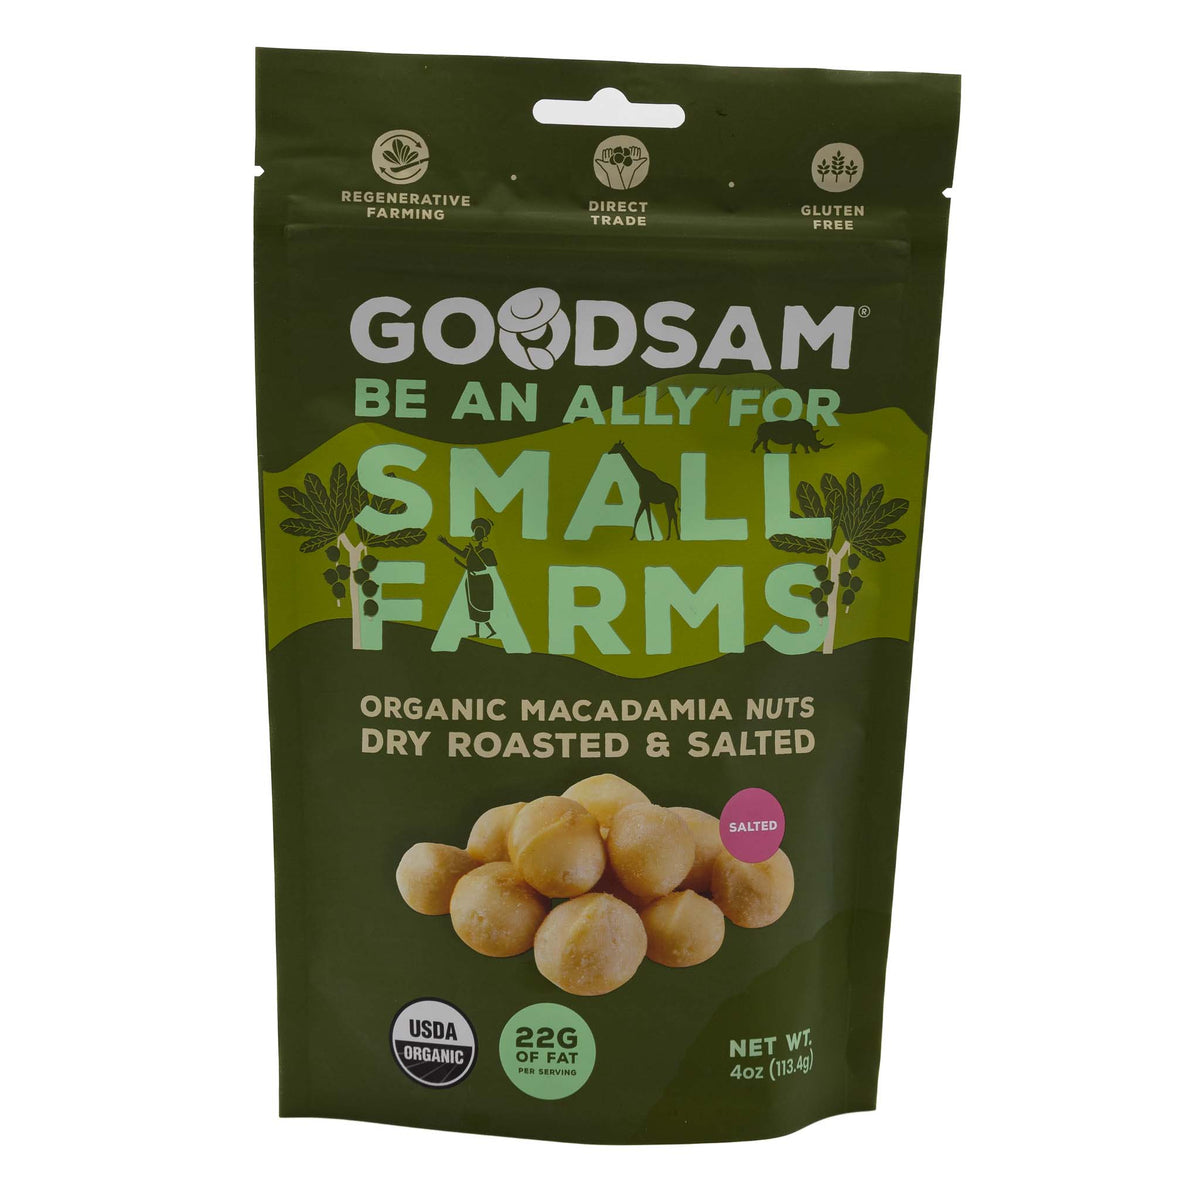 Goodsam Macadamia Nuts